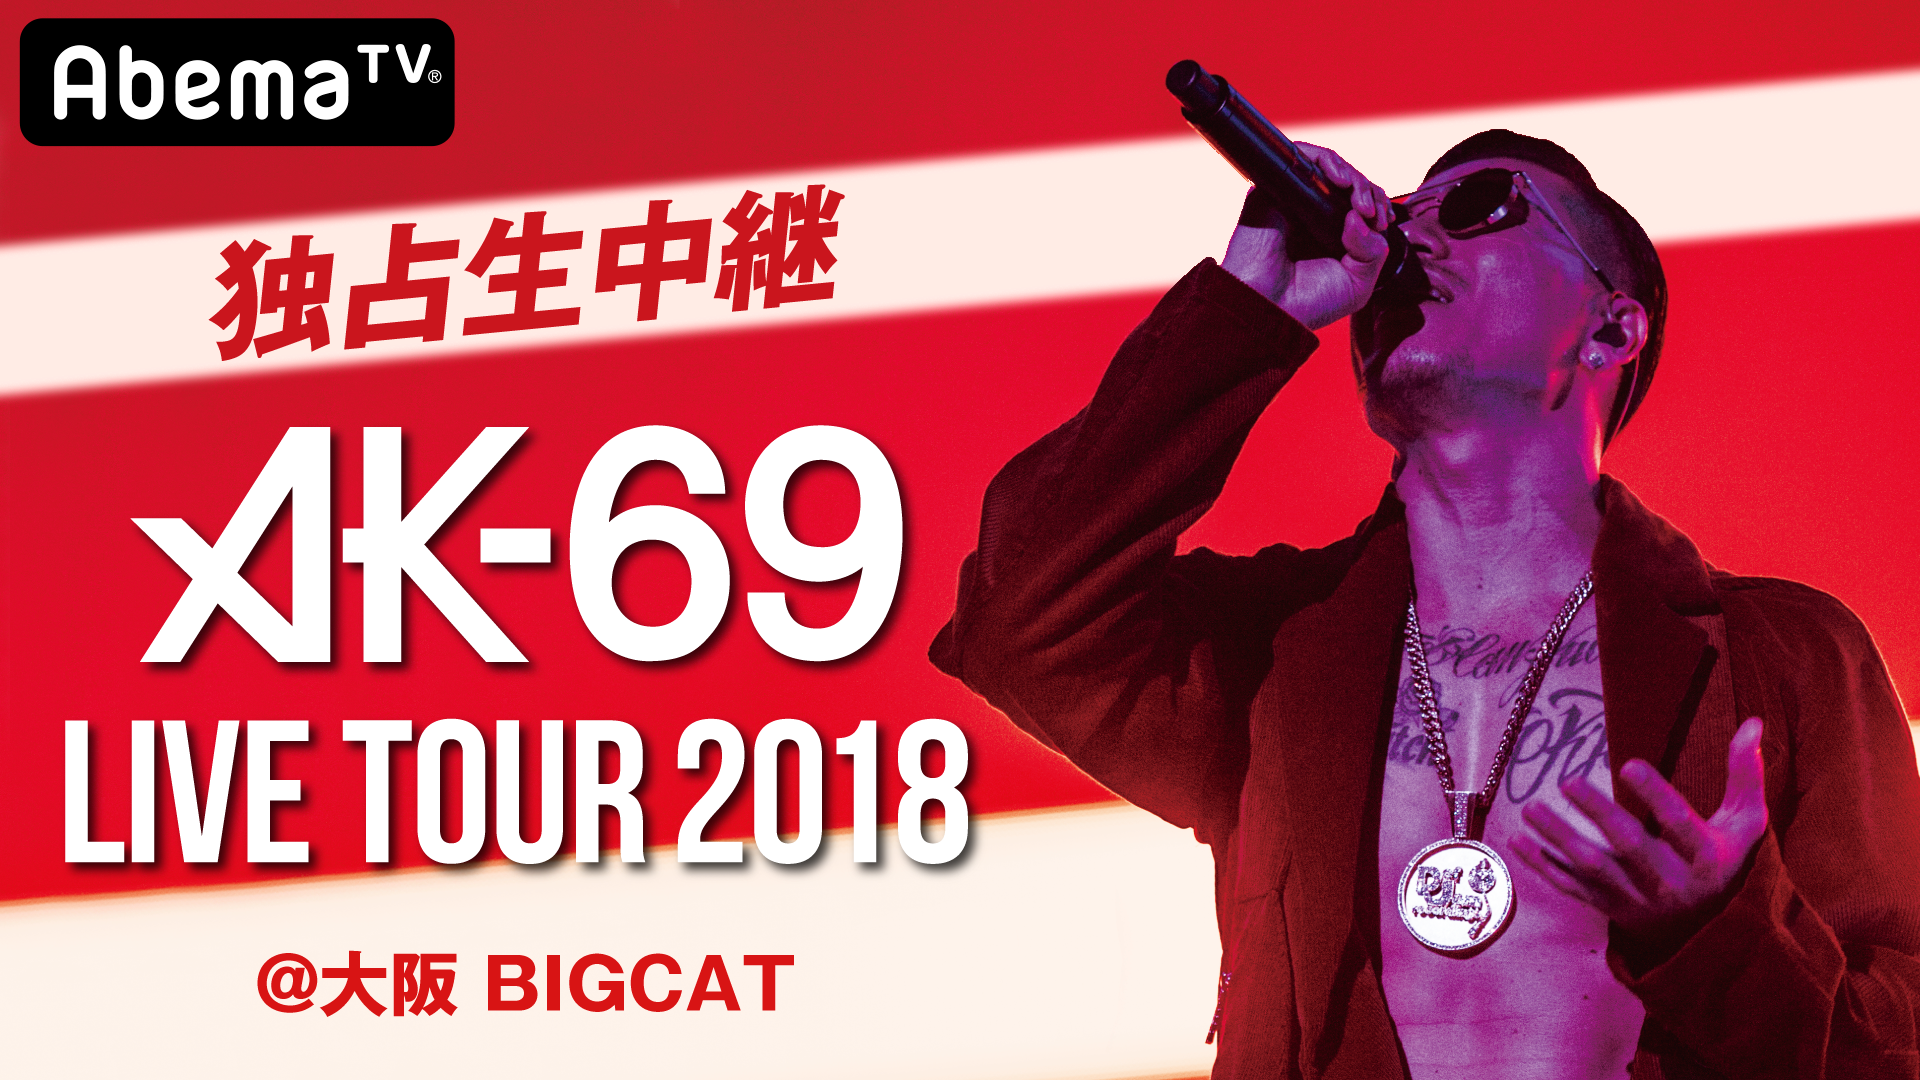 1月18日 金 19 00 Ak 69 Live Tour 2018 大阪 Bigcat Abematv